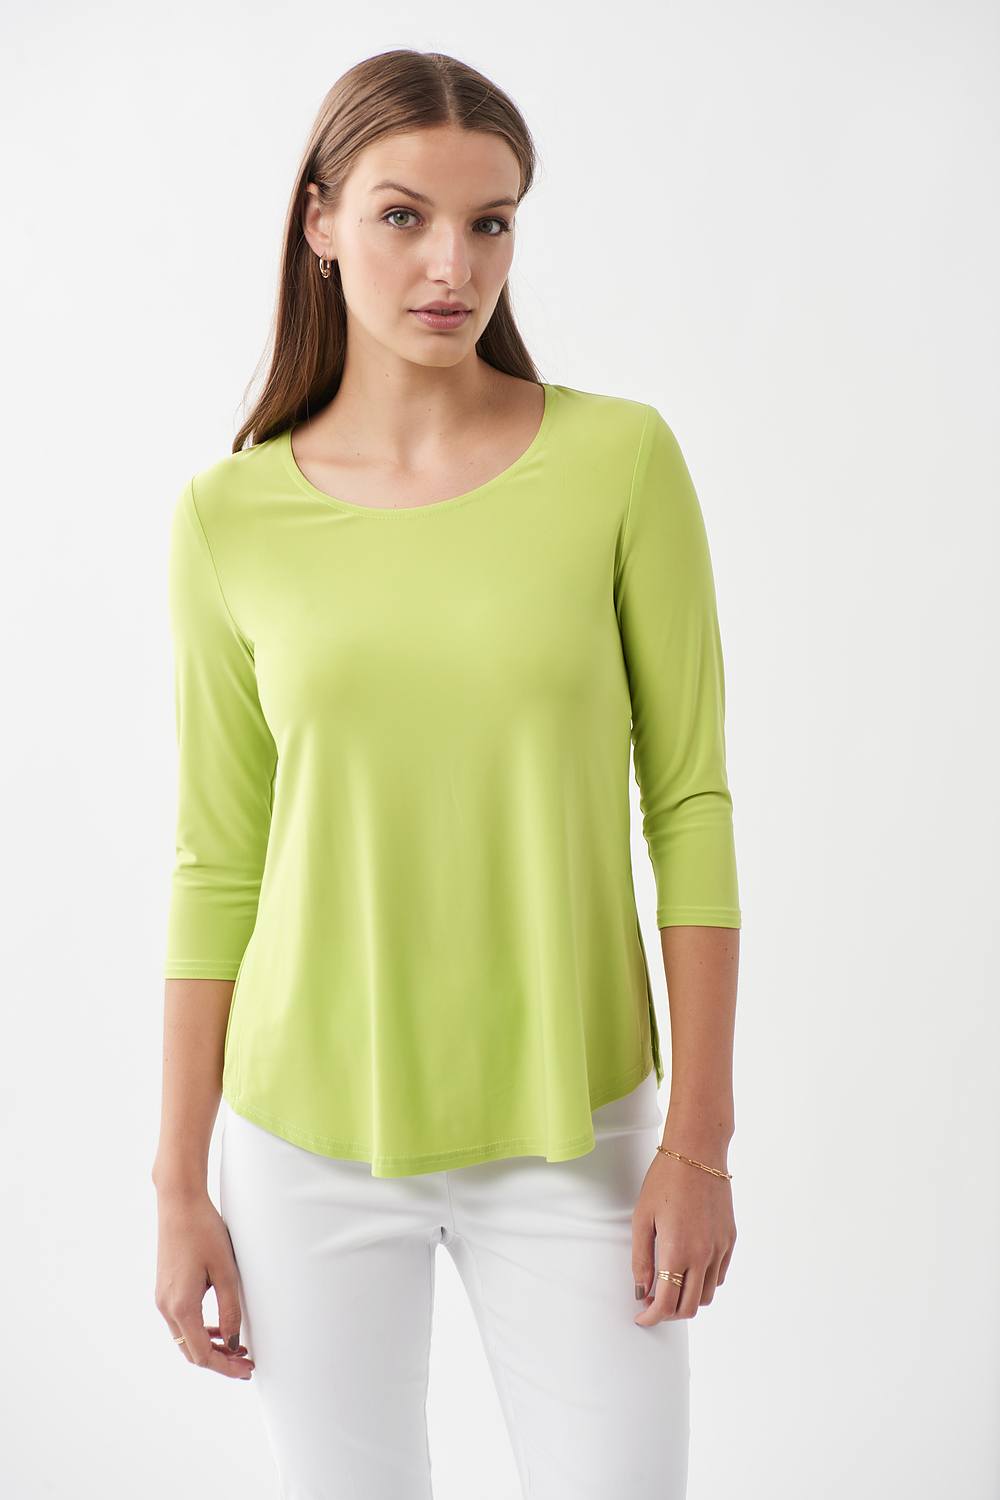 Classic 3/4 Sleeve T-Shirt Style 183171. Margarita